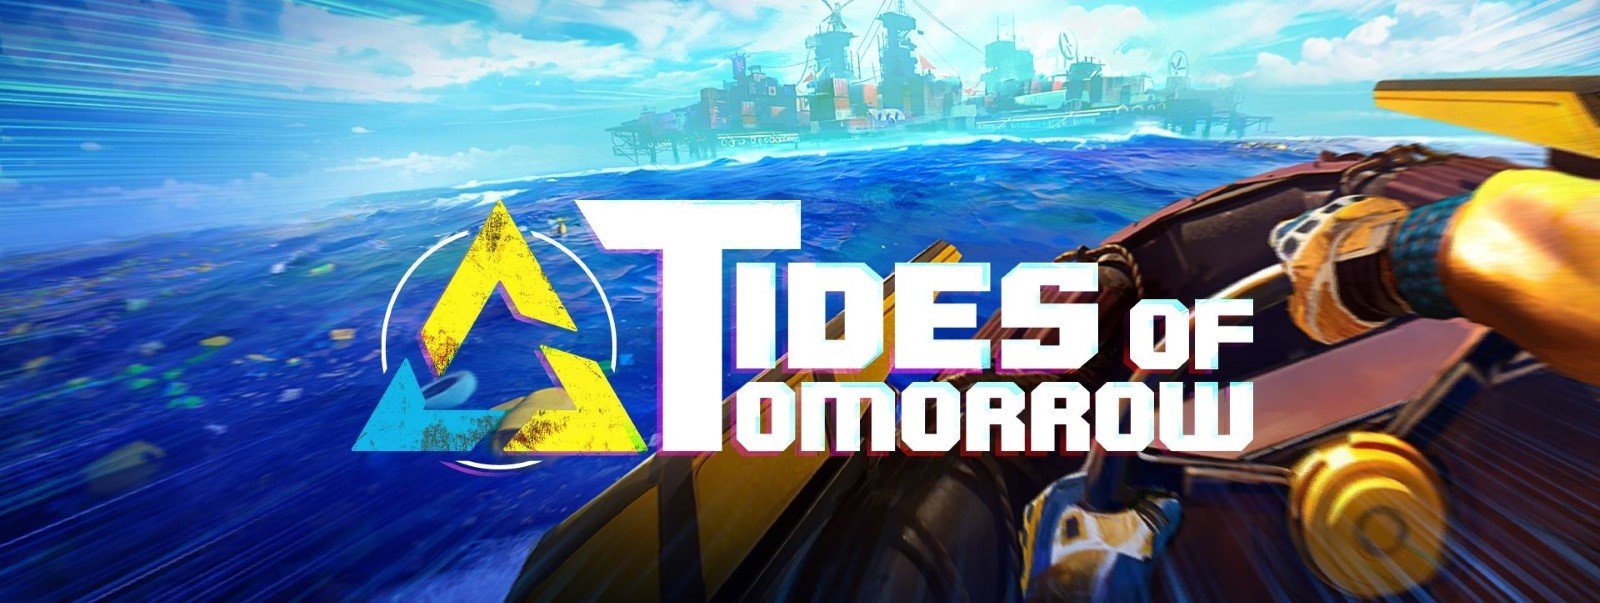 Tides of Tomorrow